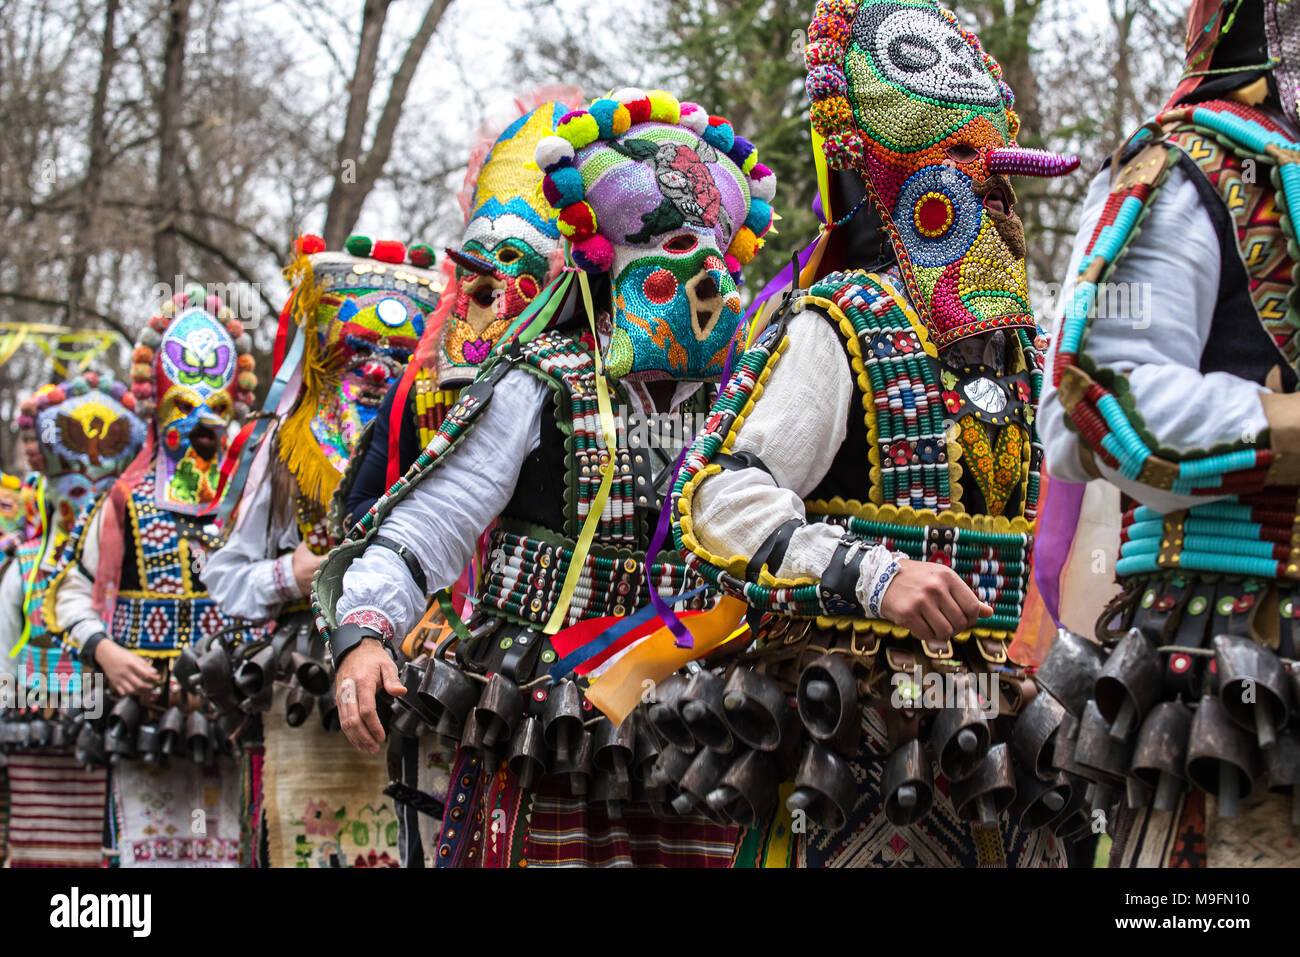 Persone in tradizionale carnevale costumi kuker al festival Kukeri kukerlandia Yambol, Bulgaria Foto Stock